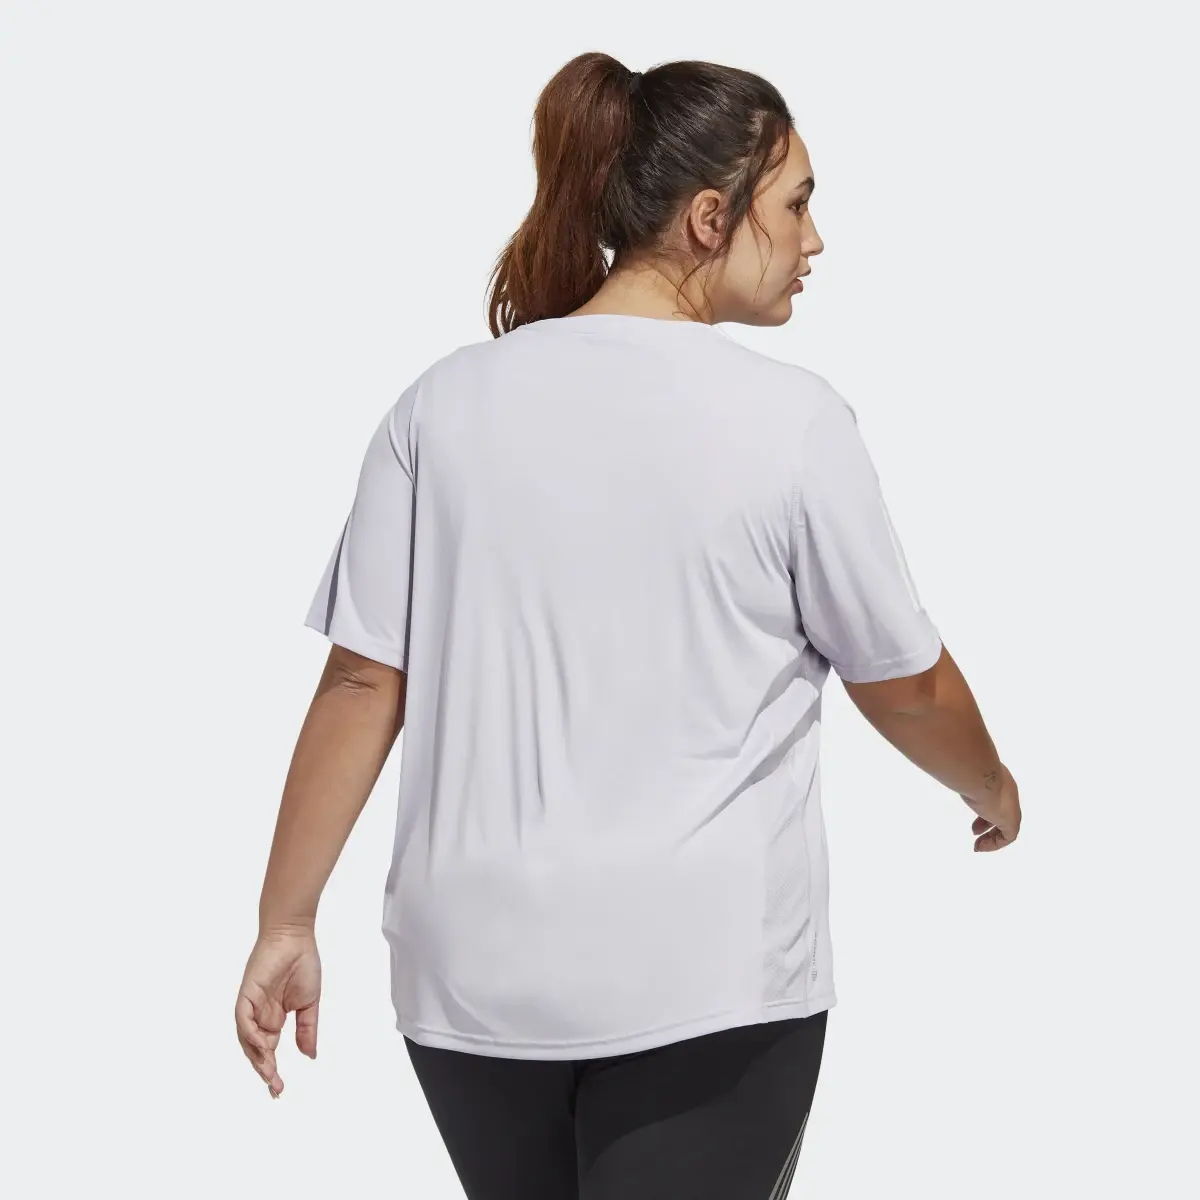 Adidas Own the Run T-Shirt (Plus Size). 3